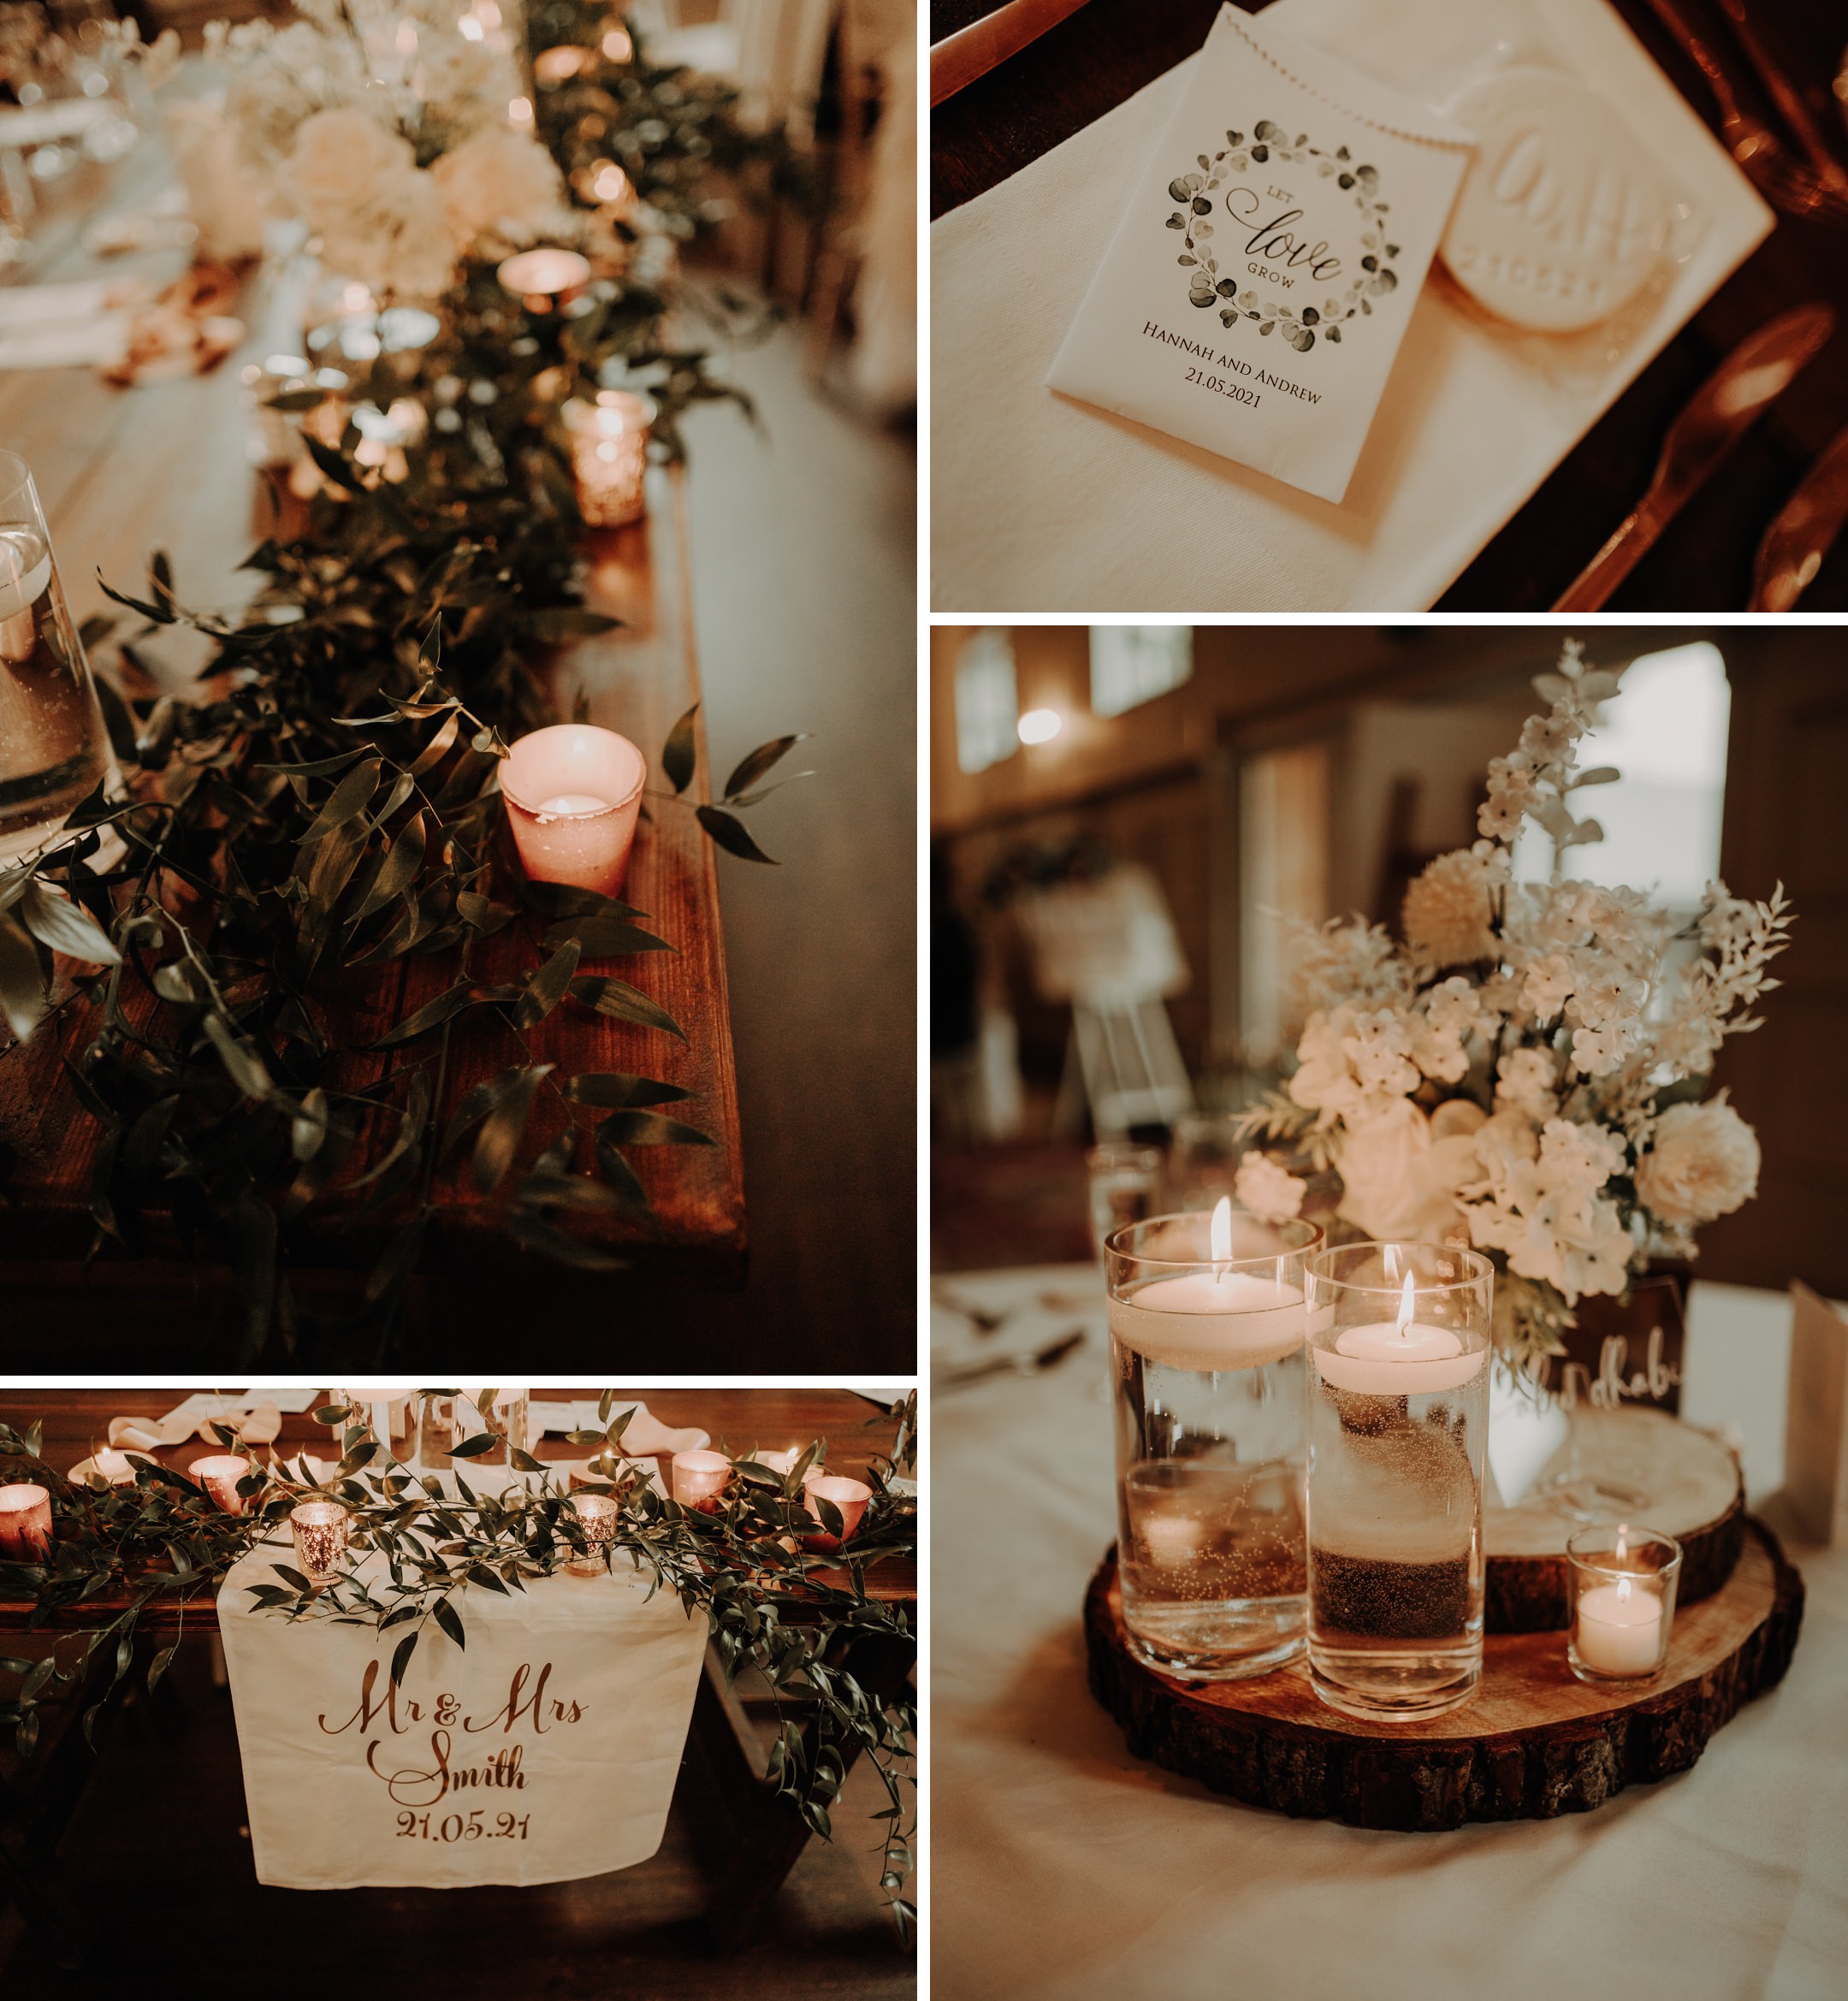 netherdale house wedding venue aberdeenshire interior centerpiece table setup ideas decorations flowers florals